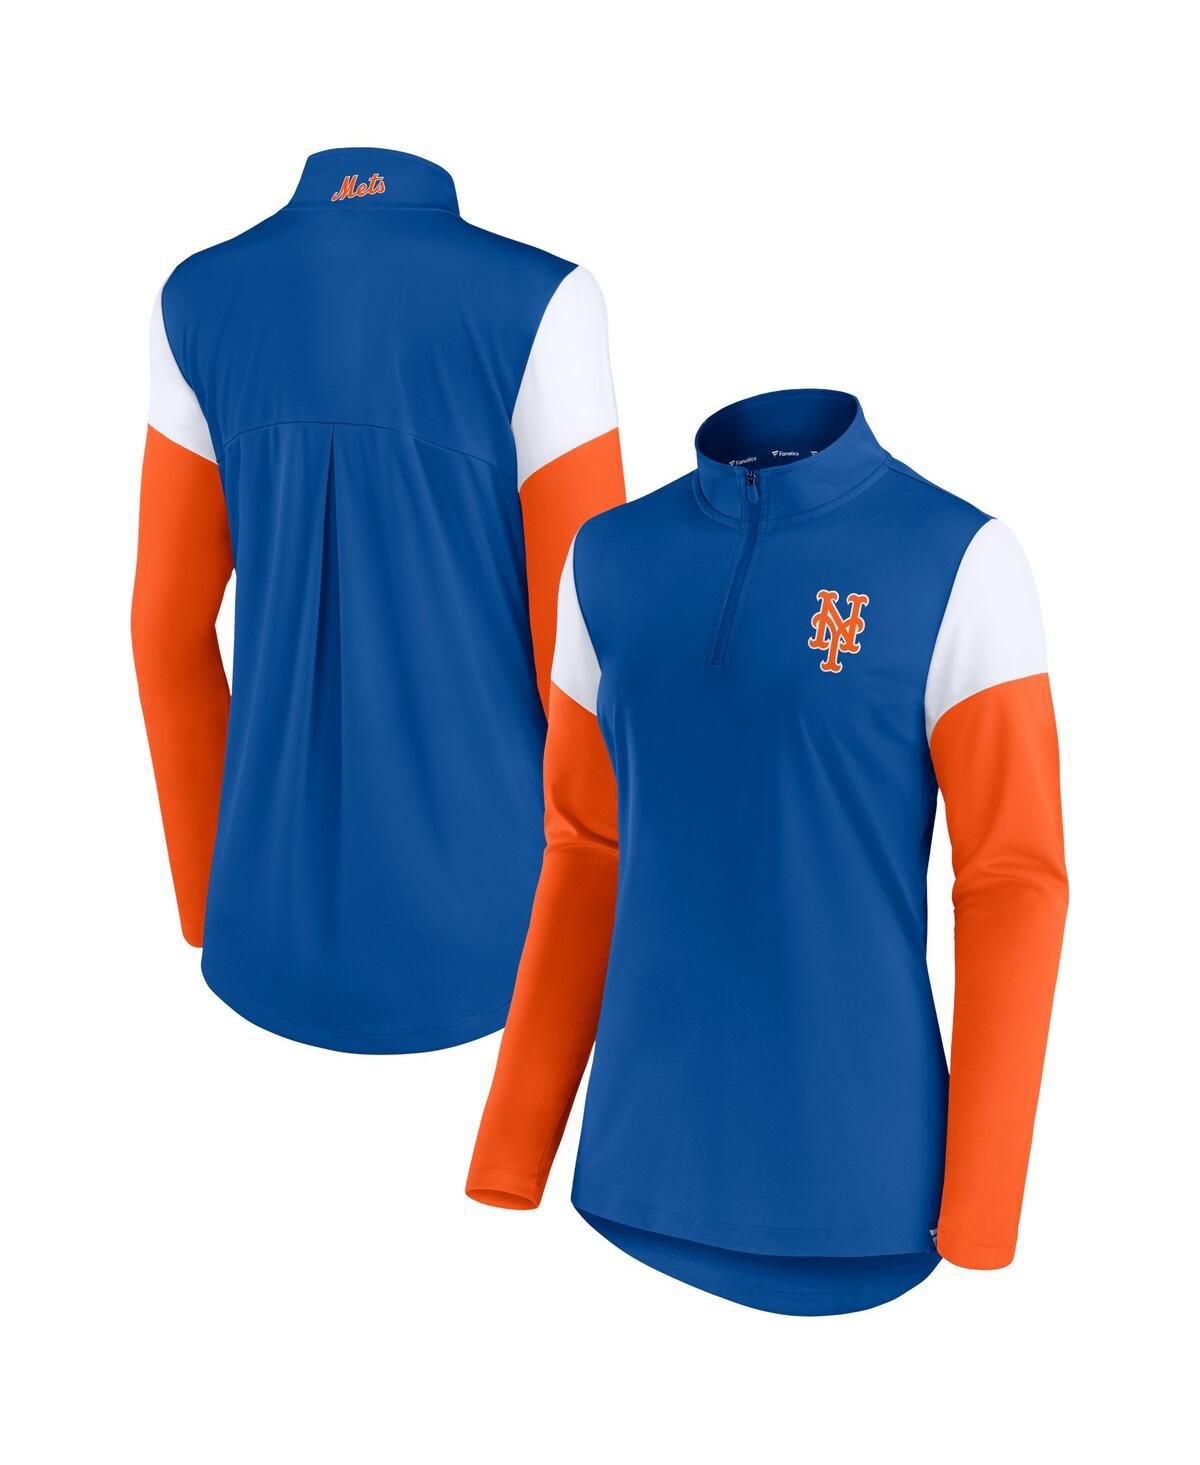 Women's Fanatics Royal and Orange New York Mets Authentic Fleece Quarter-Zip Jacket - Royal, Orange